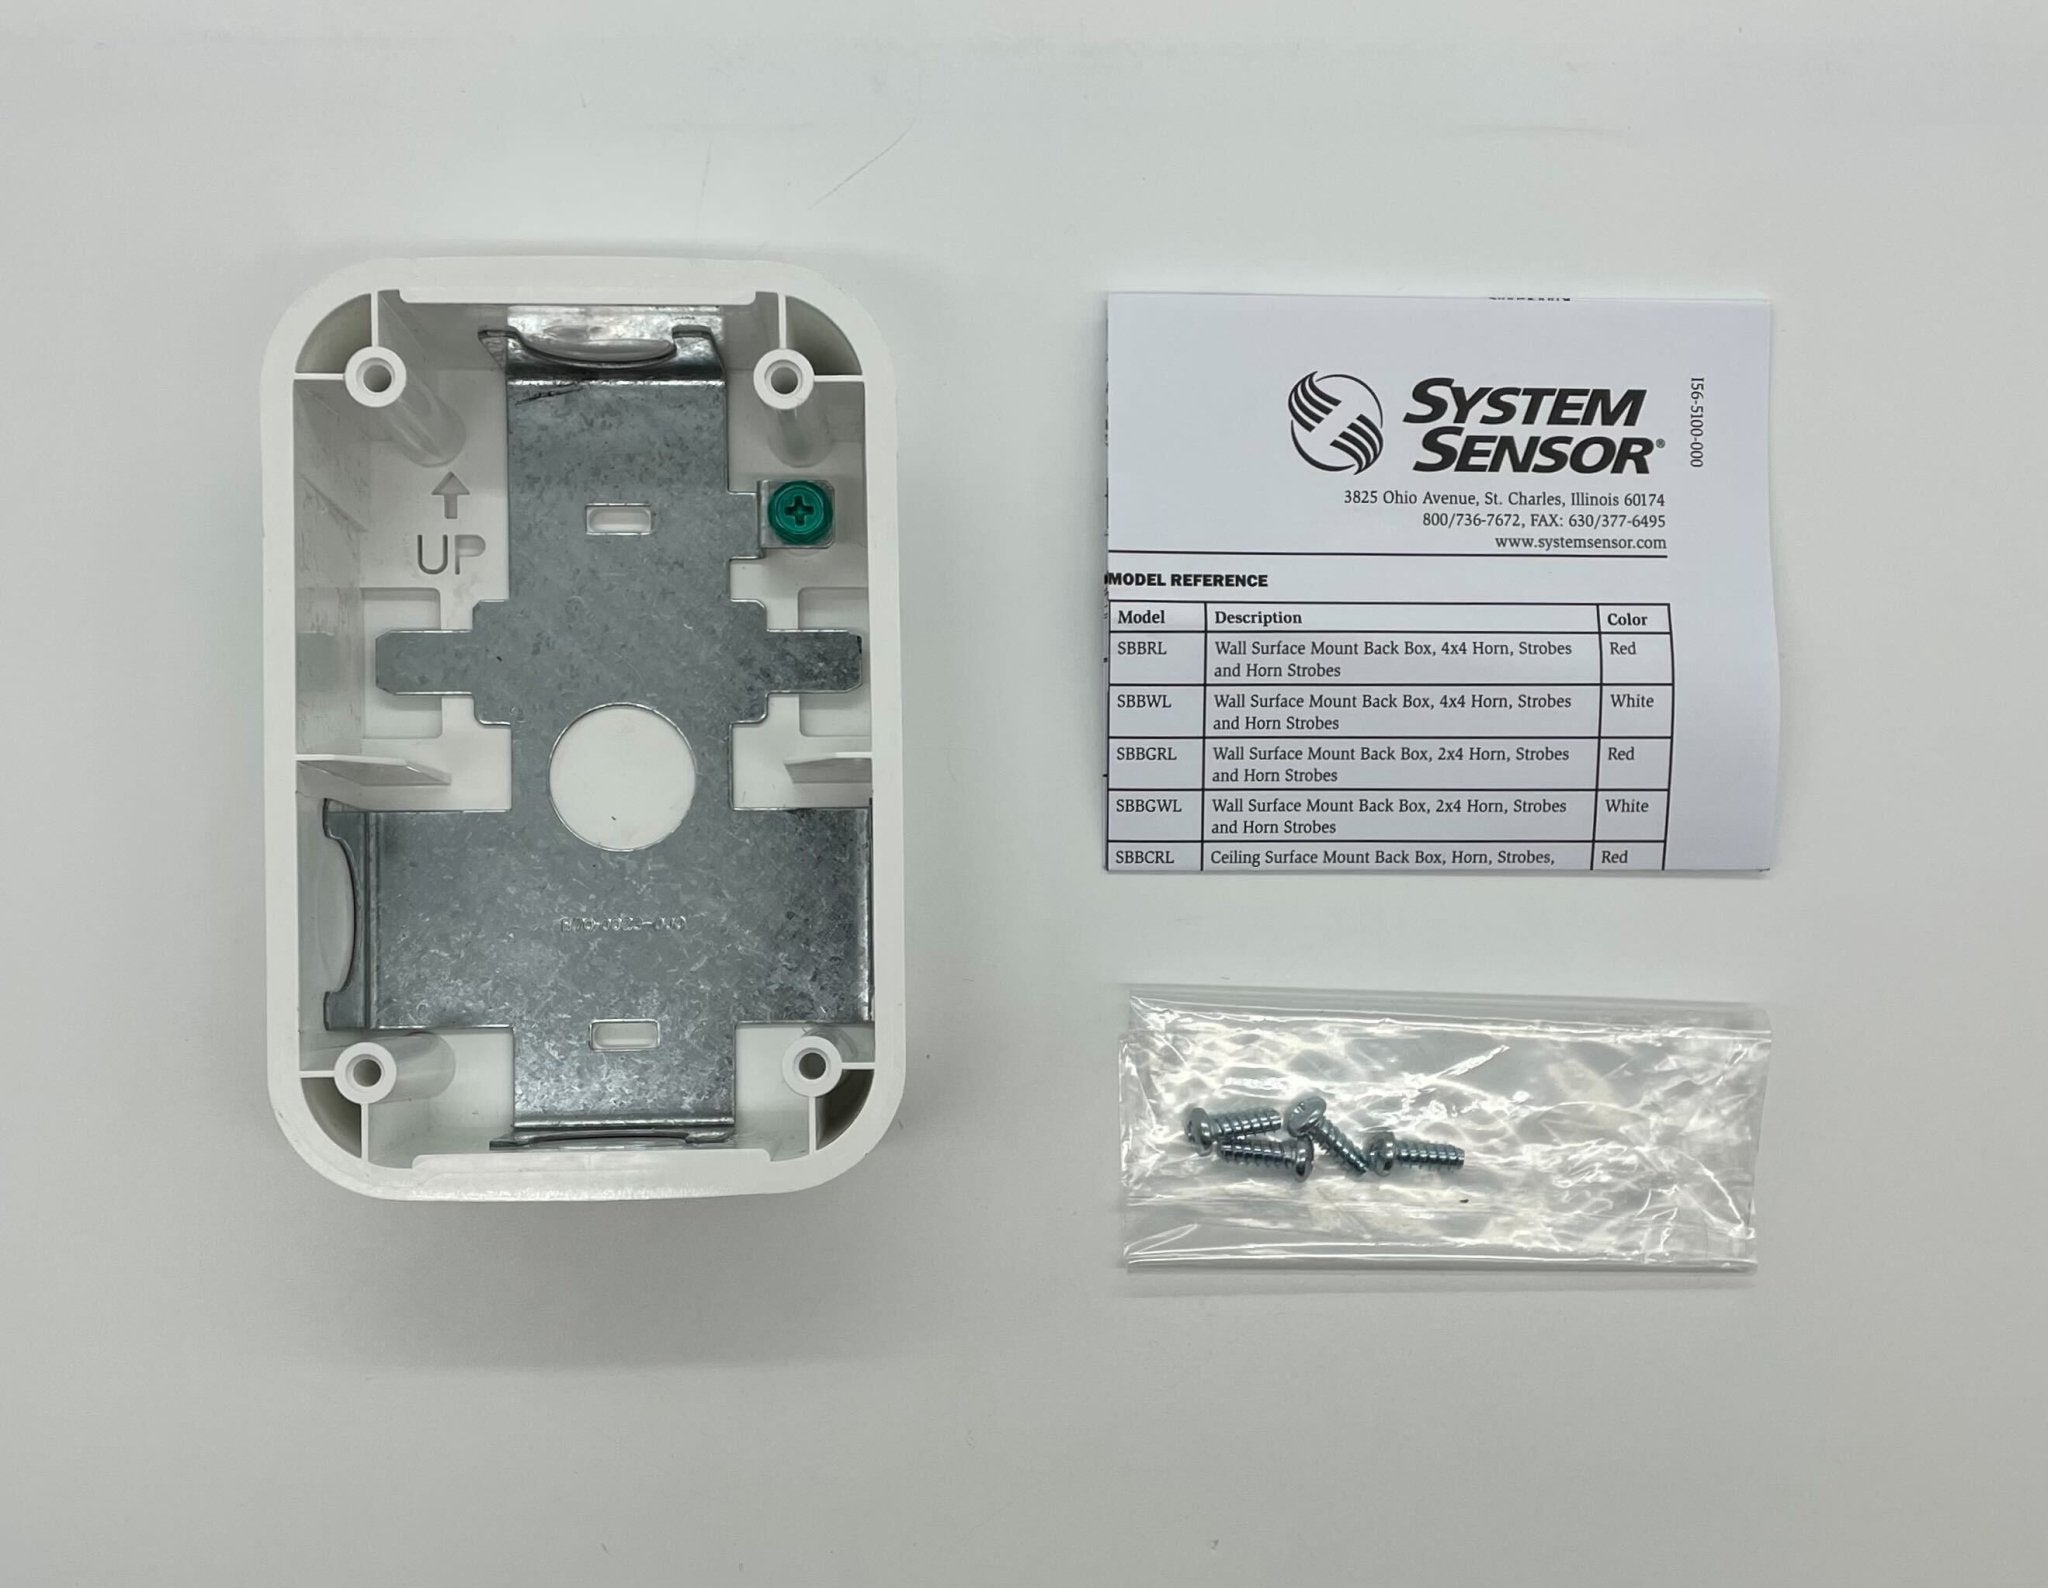 System Sensor SBBGWL - The Fire Alarm Supplier